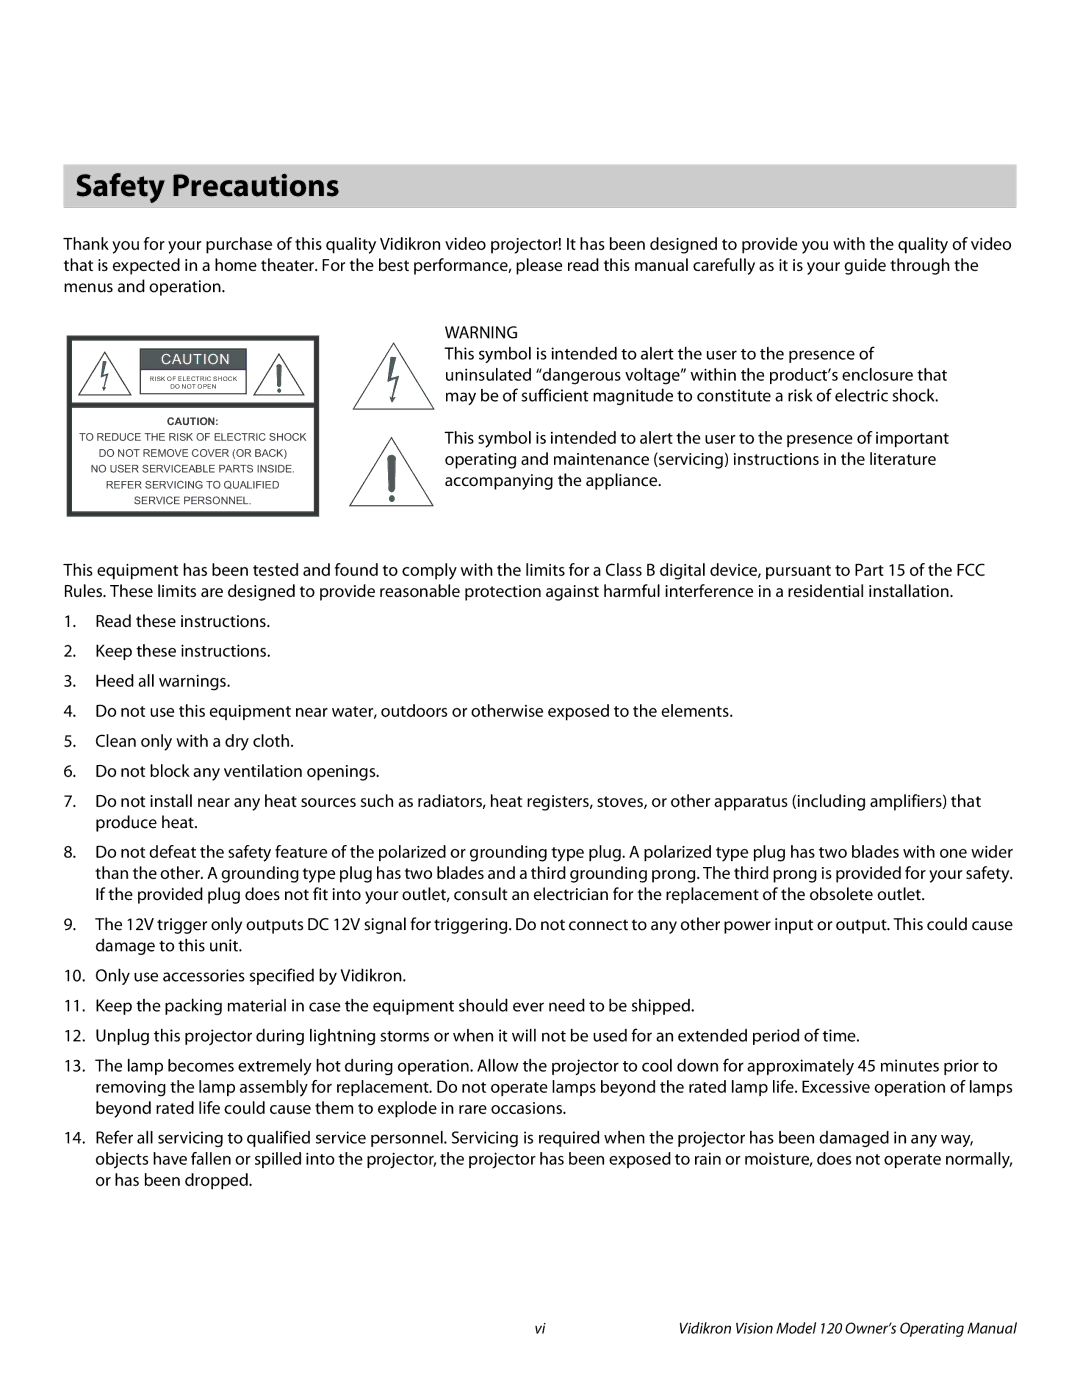 Vidikron v120 manual Safety Precautions 